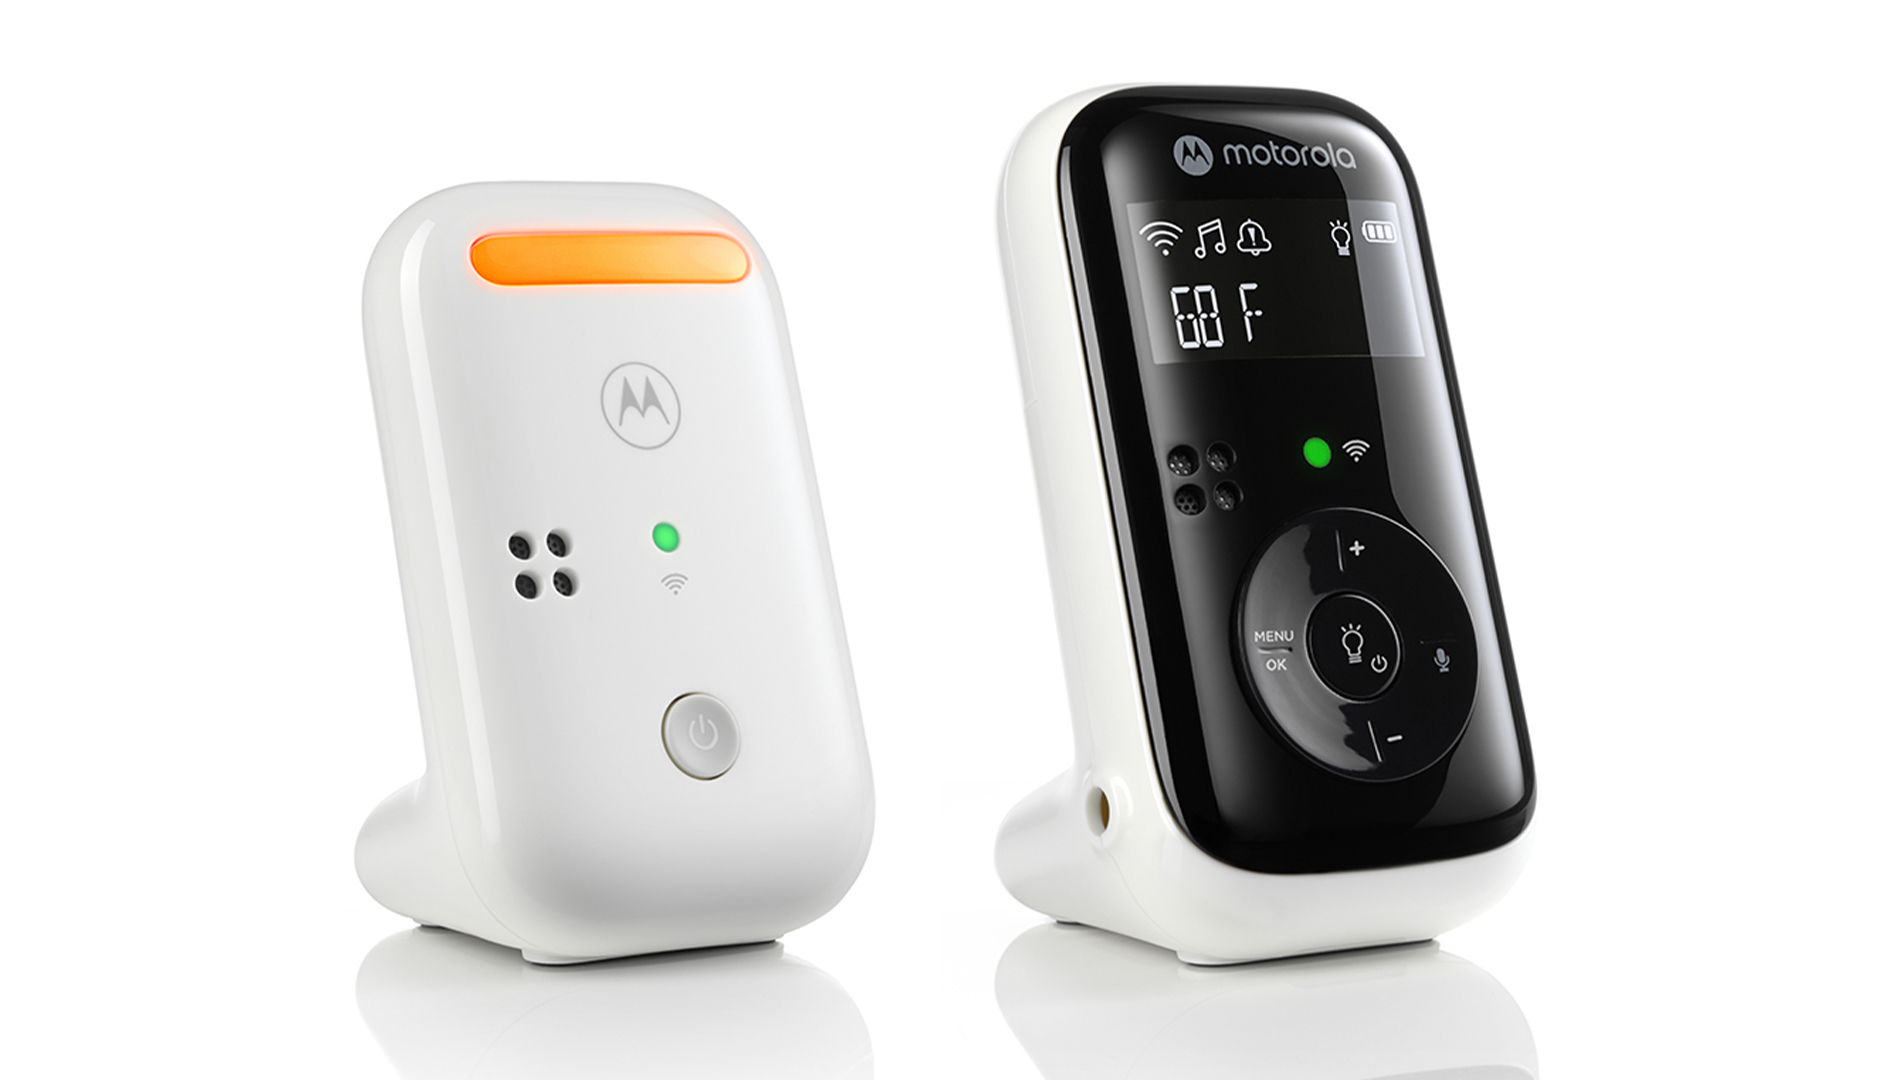 Motorola Nursery  AM21 DECT Audio Baby Monitor